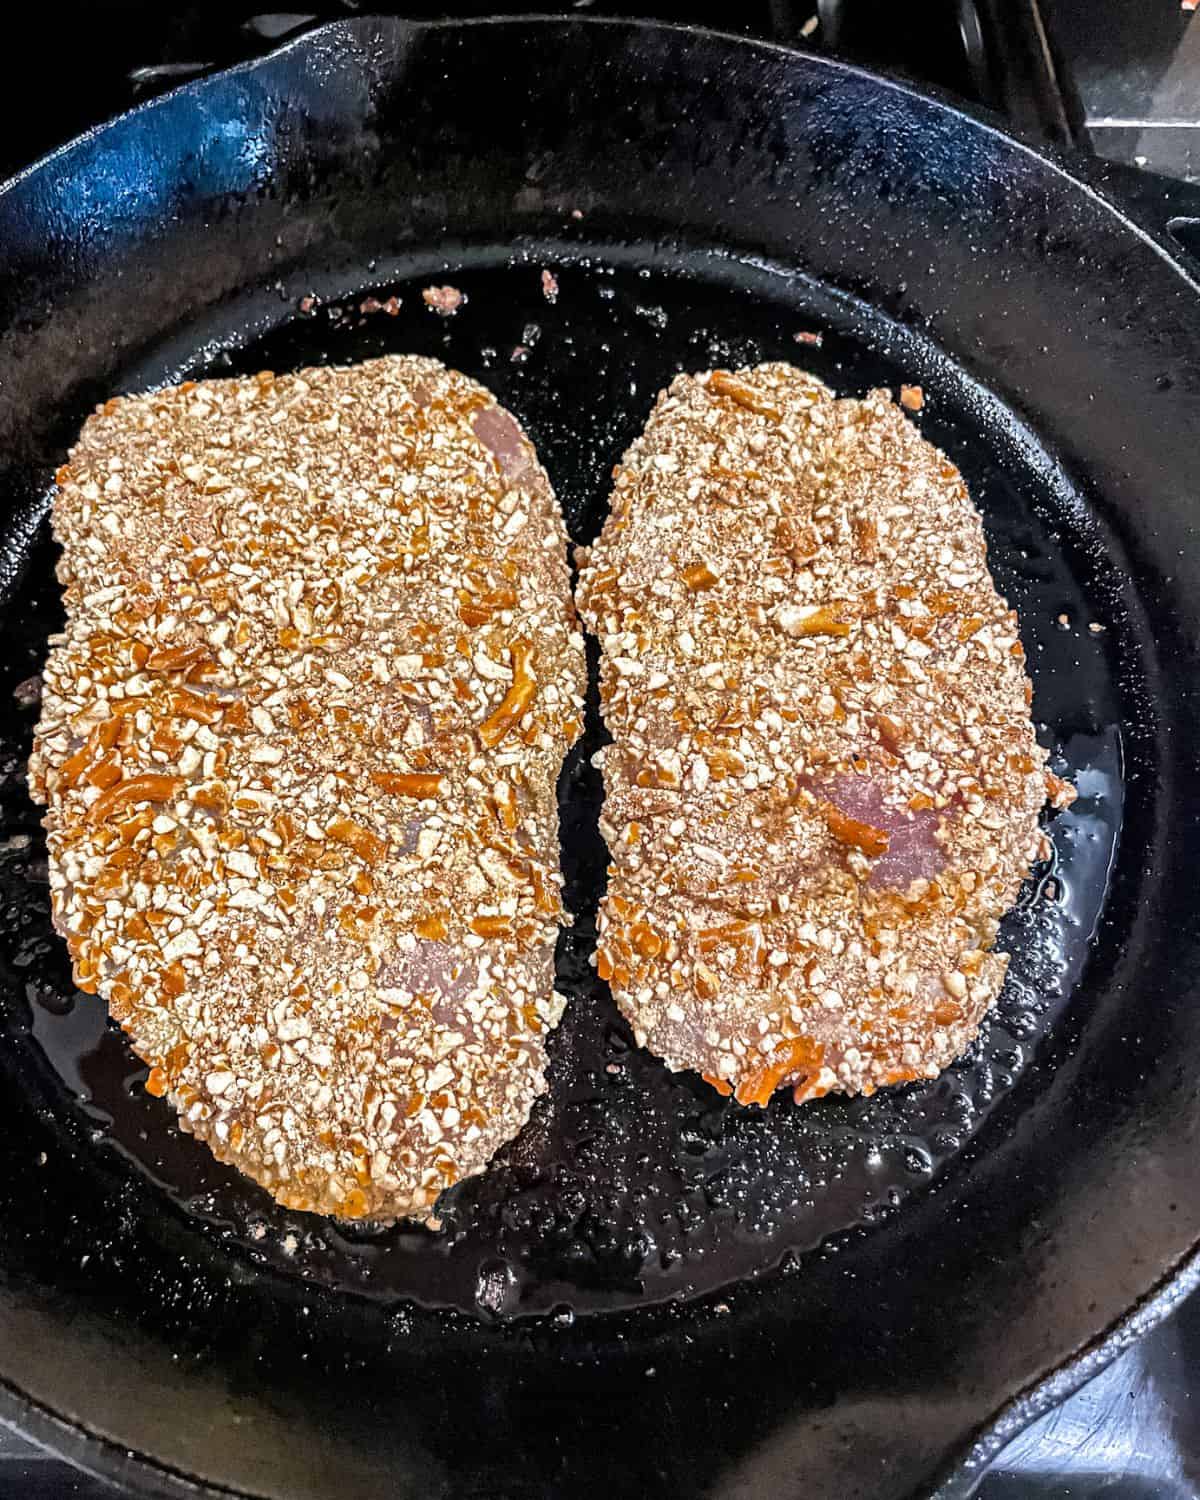 Pretzel chicken cutlets searing in a cast iron skillet.